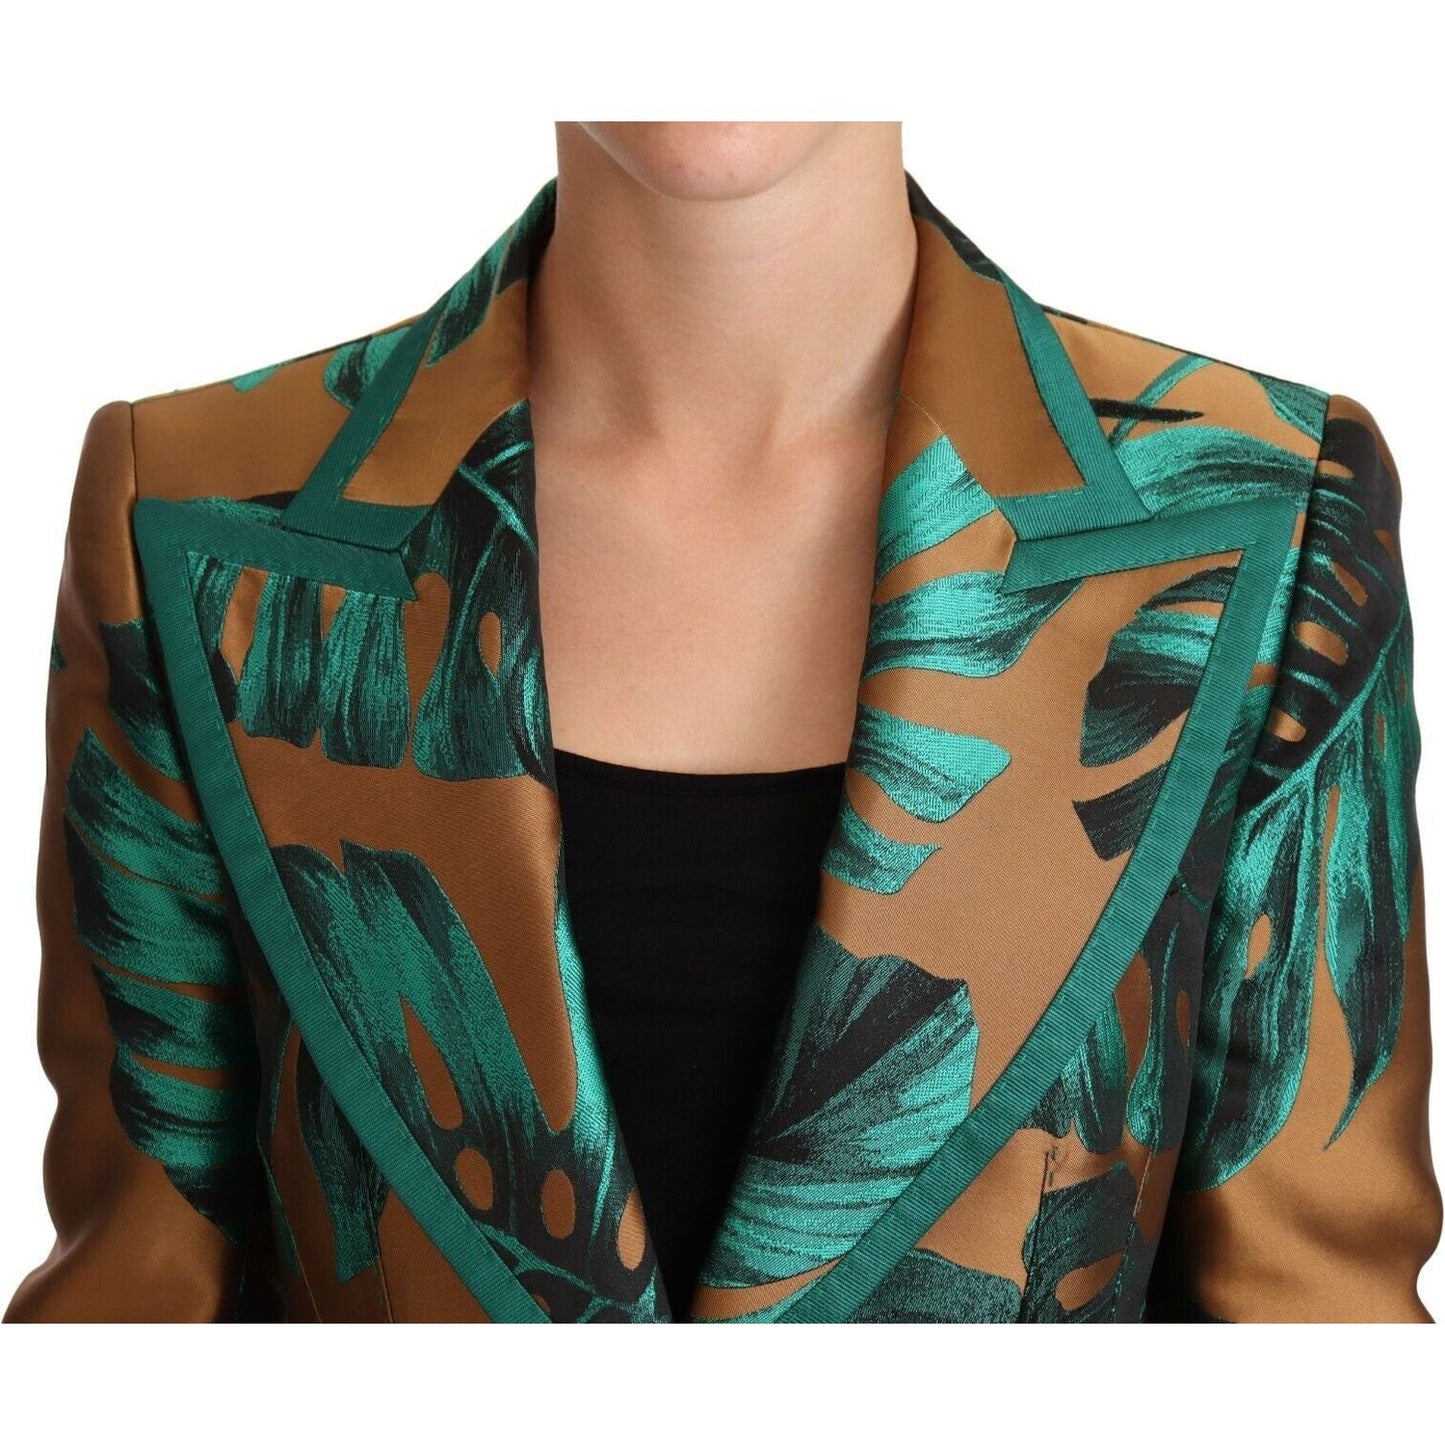 Dolce & Gabbana Elegant Leaf Print Silk-Blend Coat WOMAN COATS & JACKETS brown-green-leaf-jacquard-coat-jacket